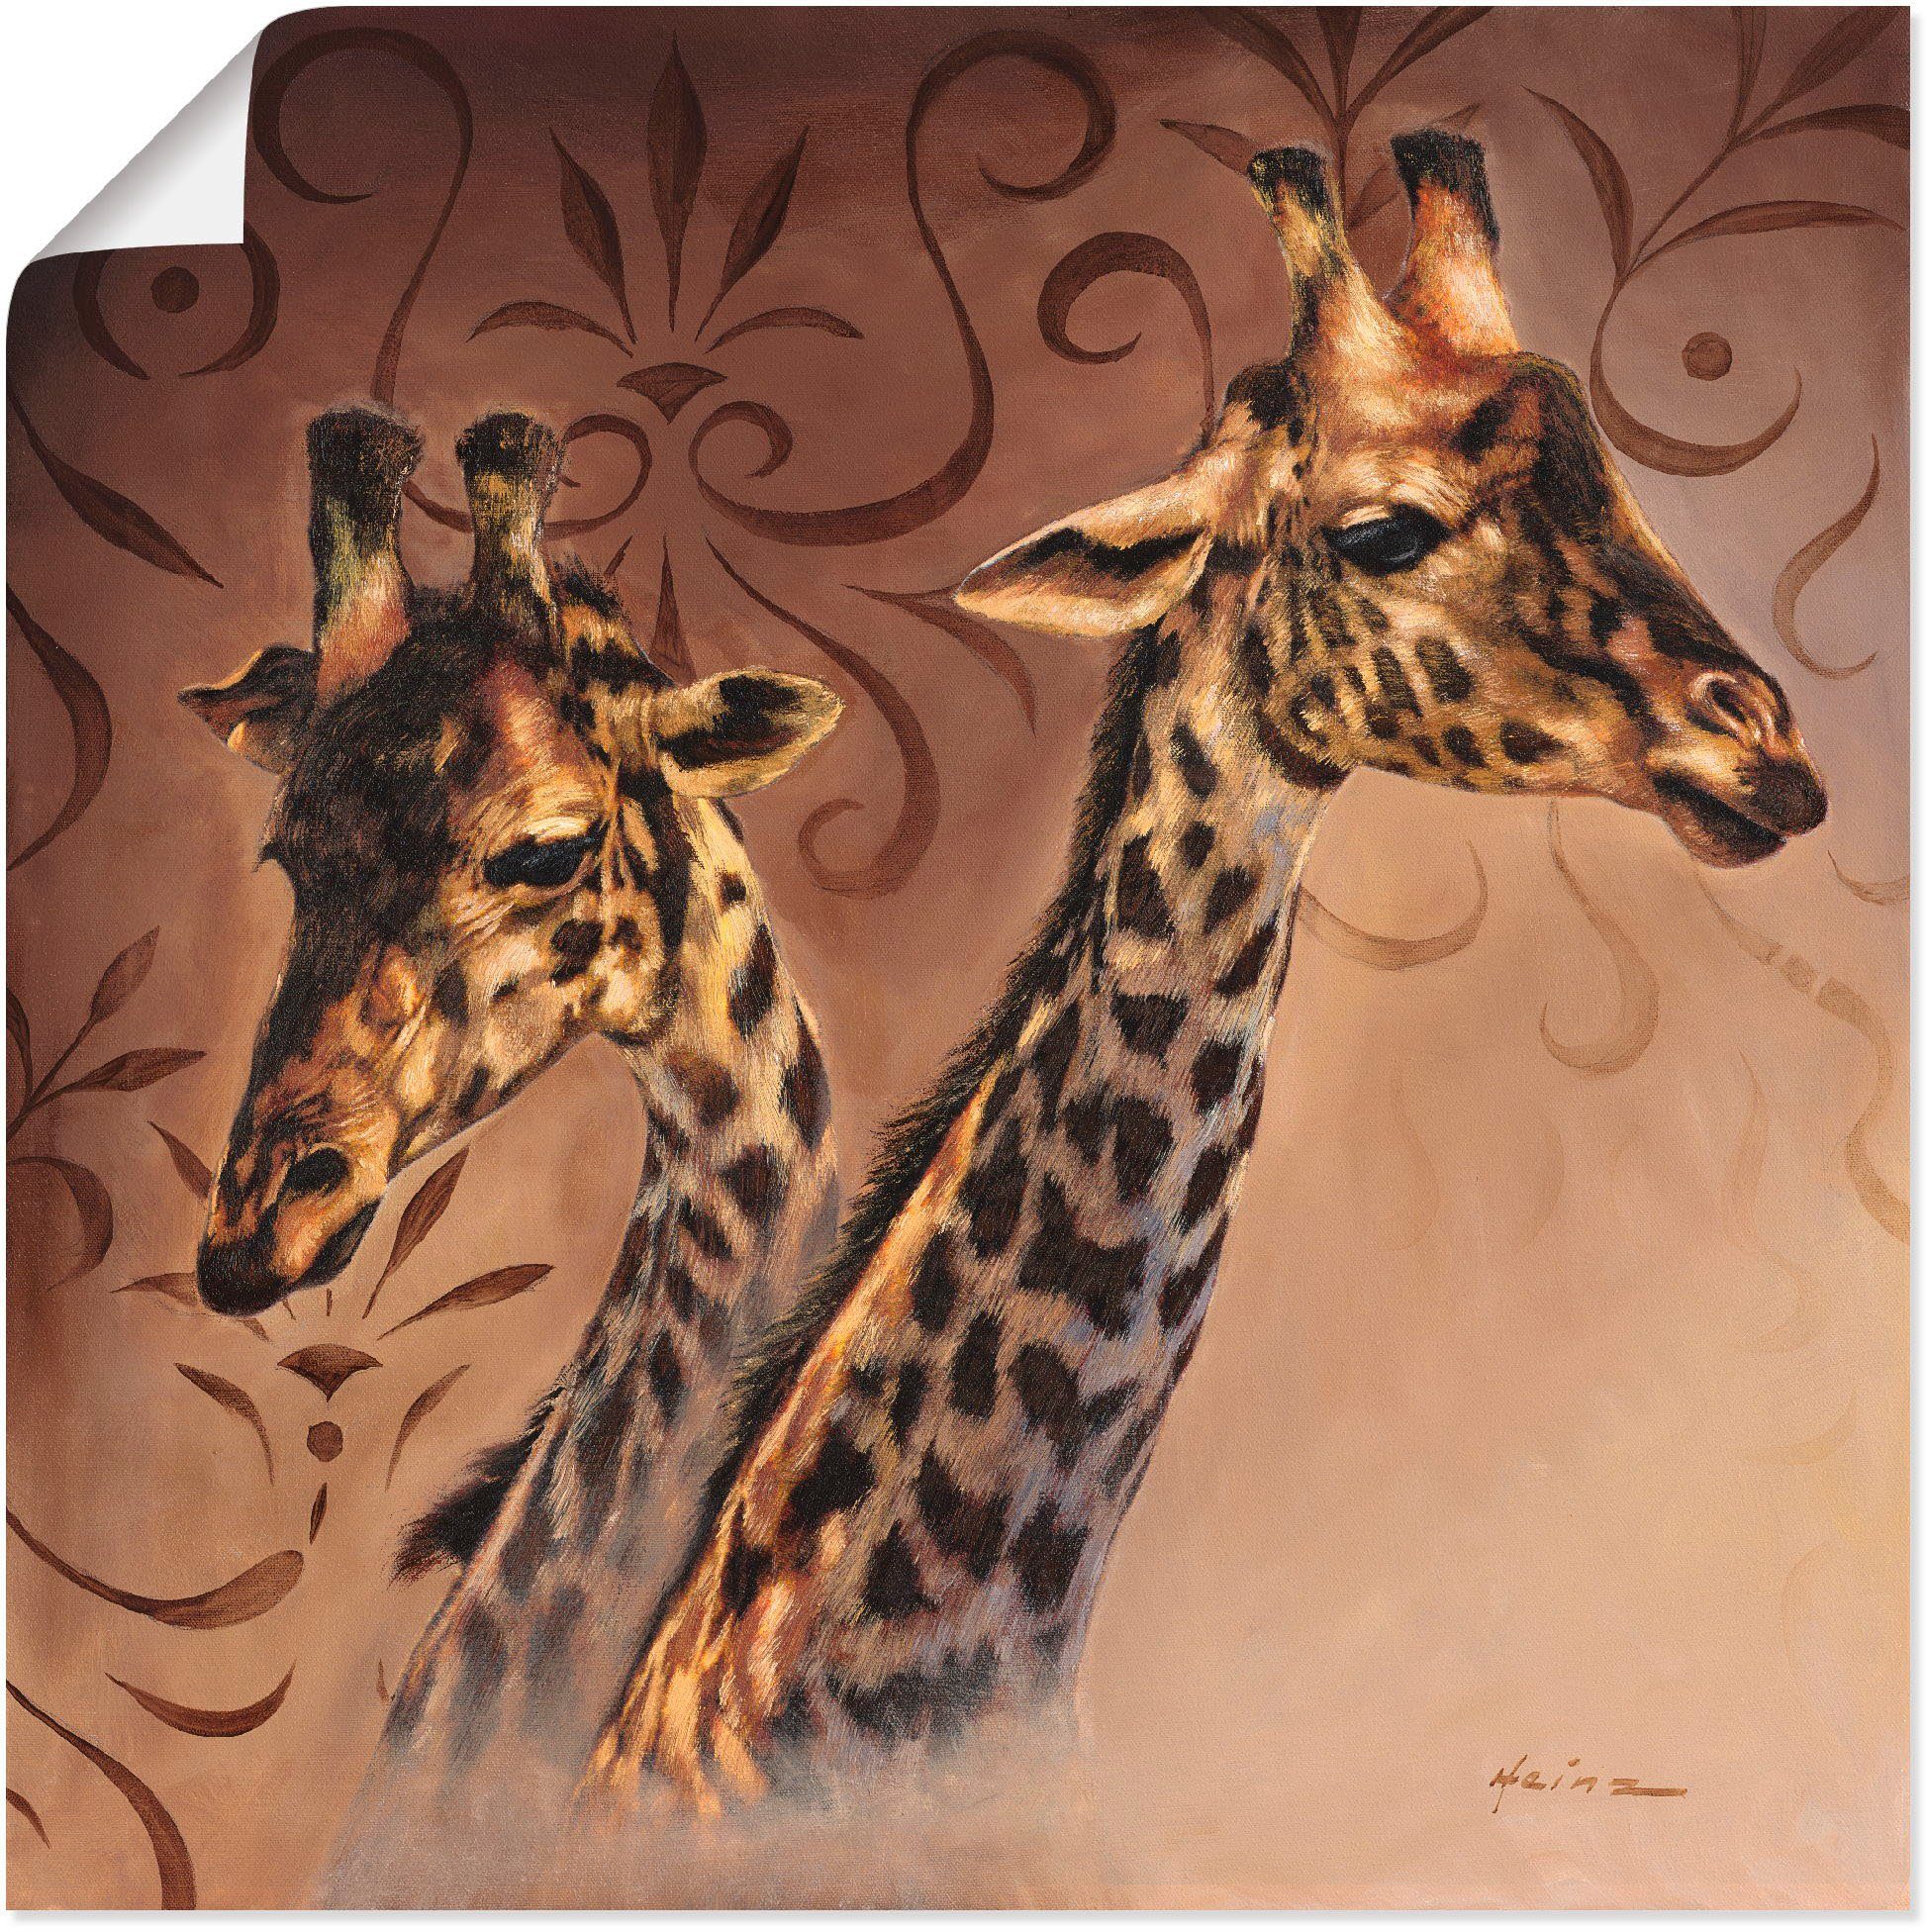 Artland Artprint Giraffen portret in vele afmetingen & productsoorten - artprint van aluminium / artprint voor buiten, artprint op linnen, poster, muursticker / wandfolie ook gesch